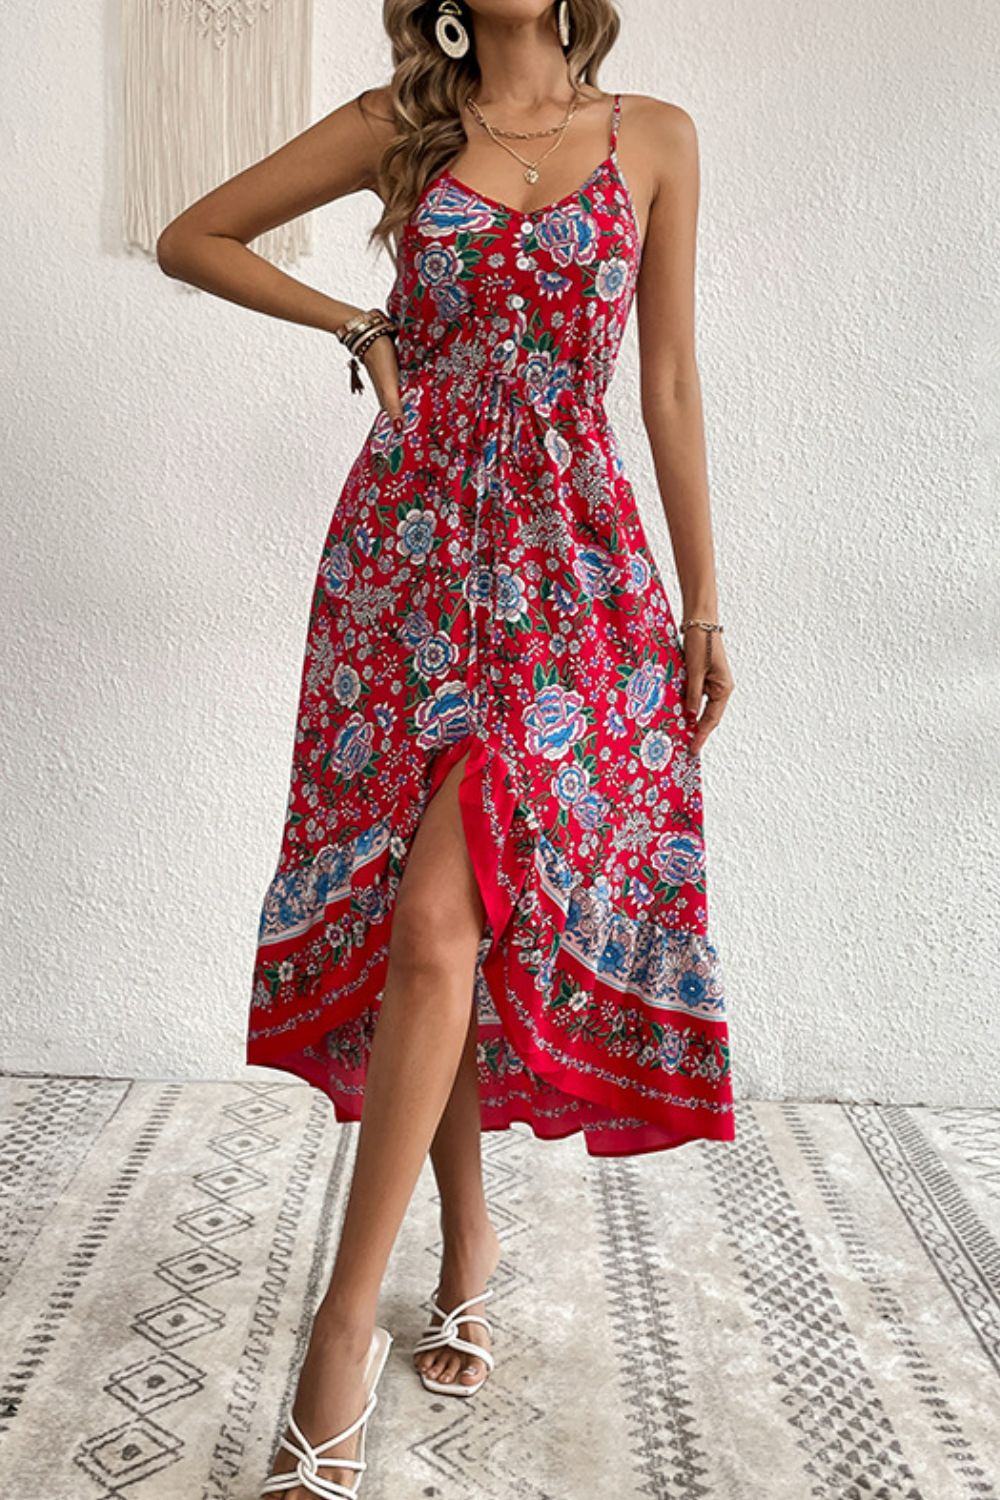 Boho Country Girl Floral Summer Dress